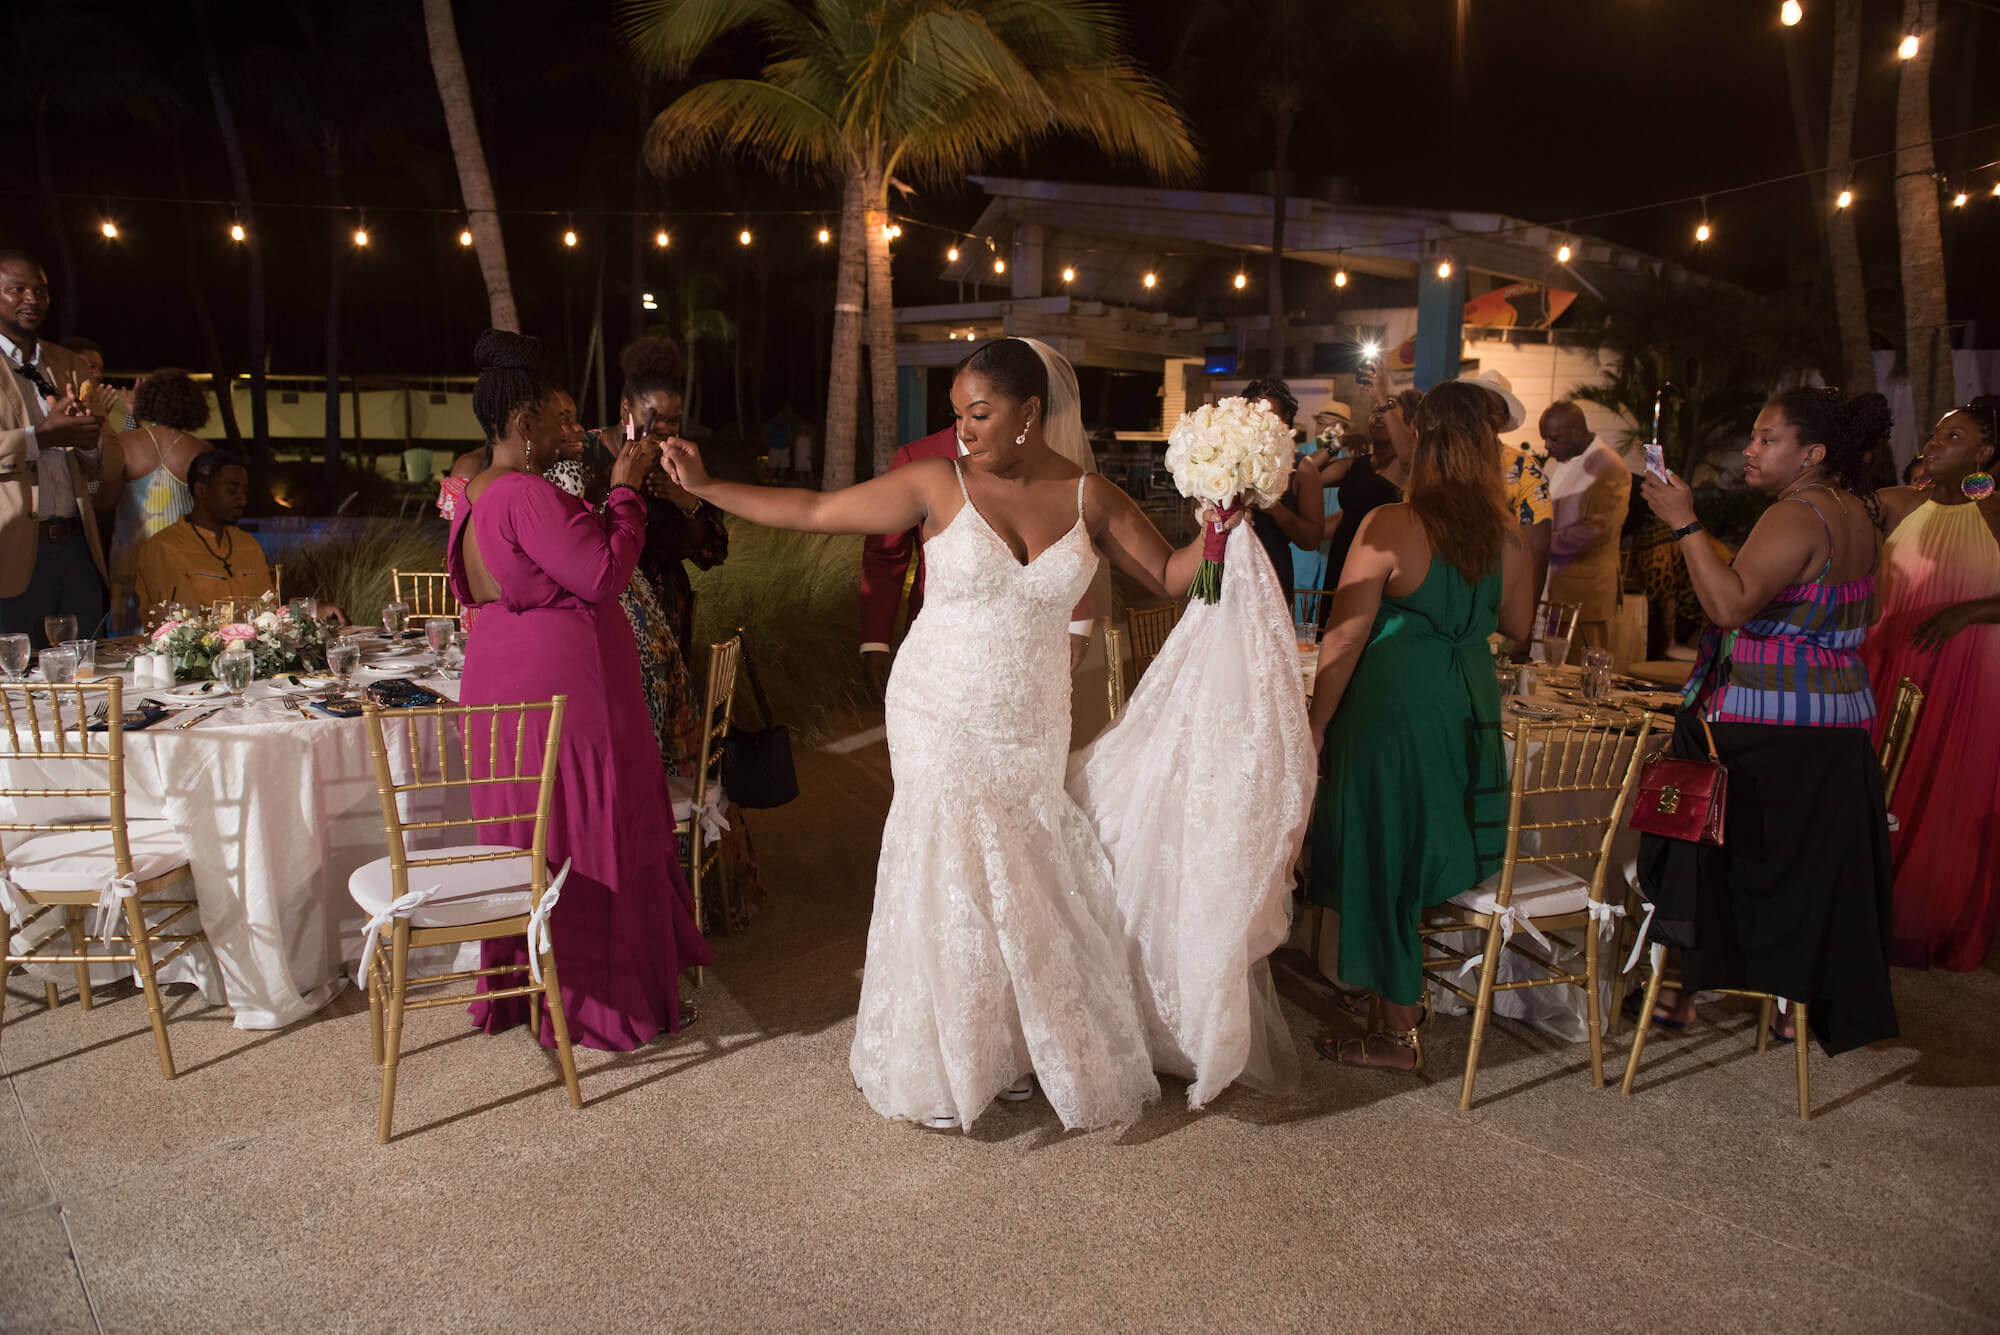 laura-how-to-plan-a-destination-wedding-in-oranjestad-aruba-hilton-aruba-resort-black-destination-bride-desti-tv-desti-guide-to-destination-weddings-2020-bride-dancing.jpg